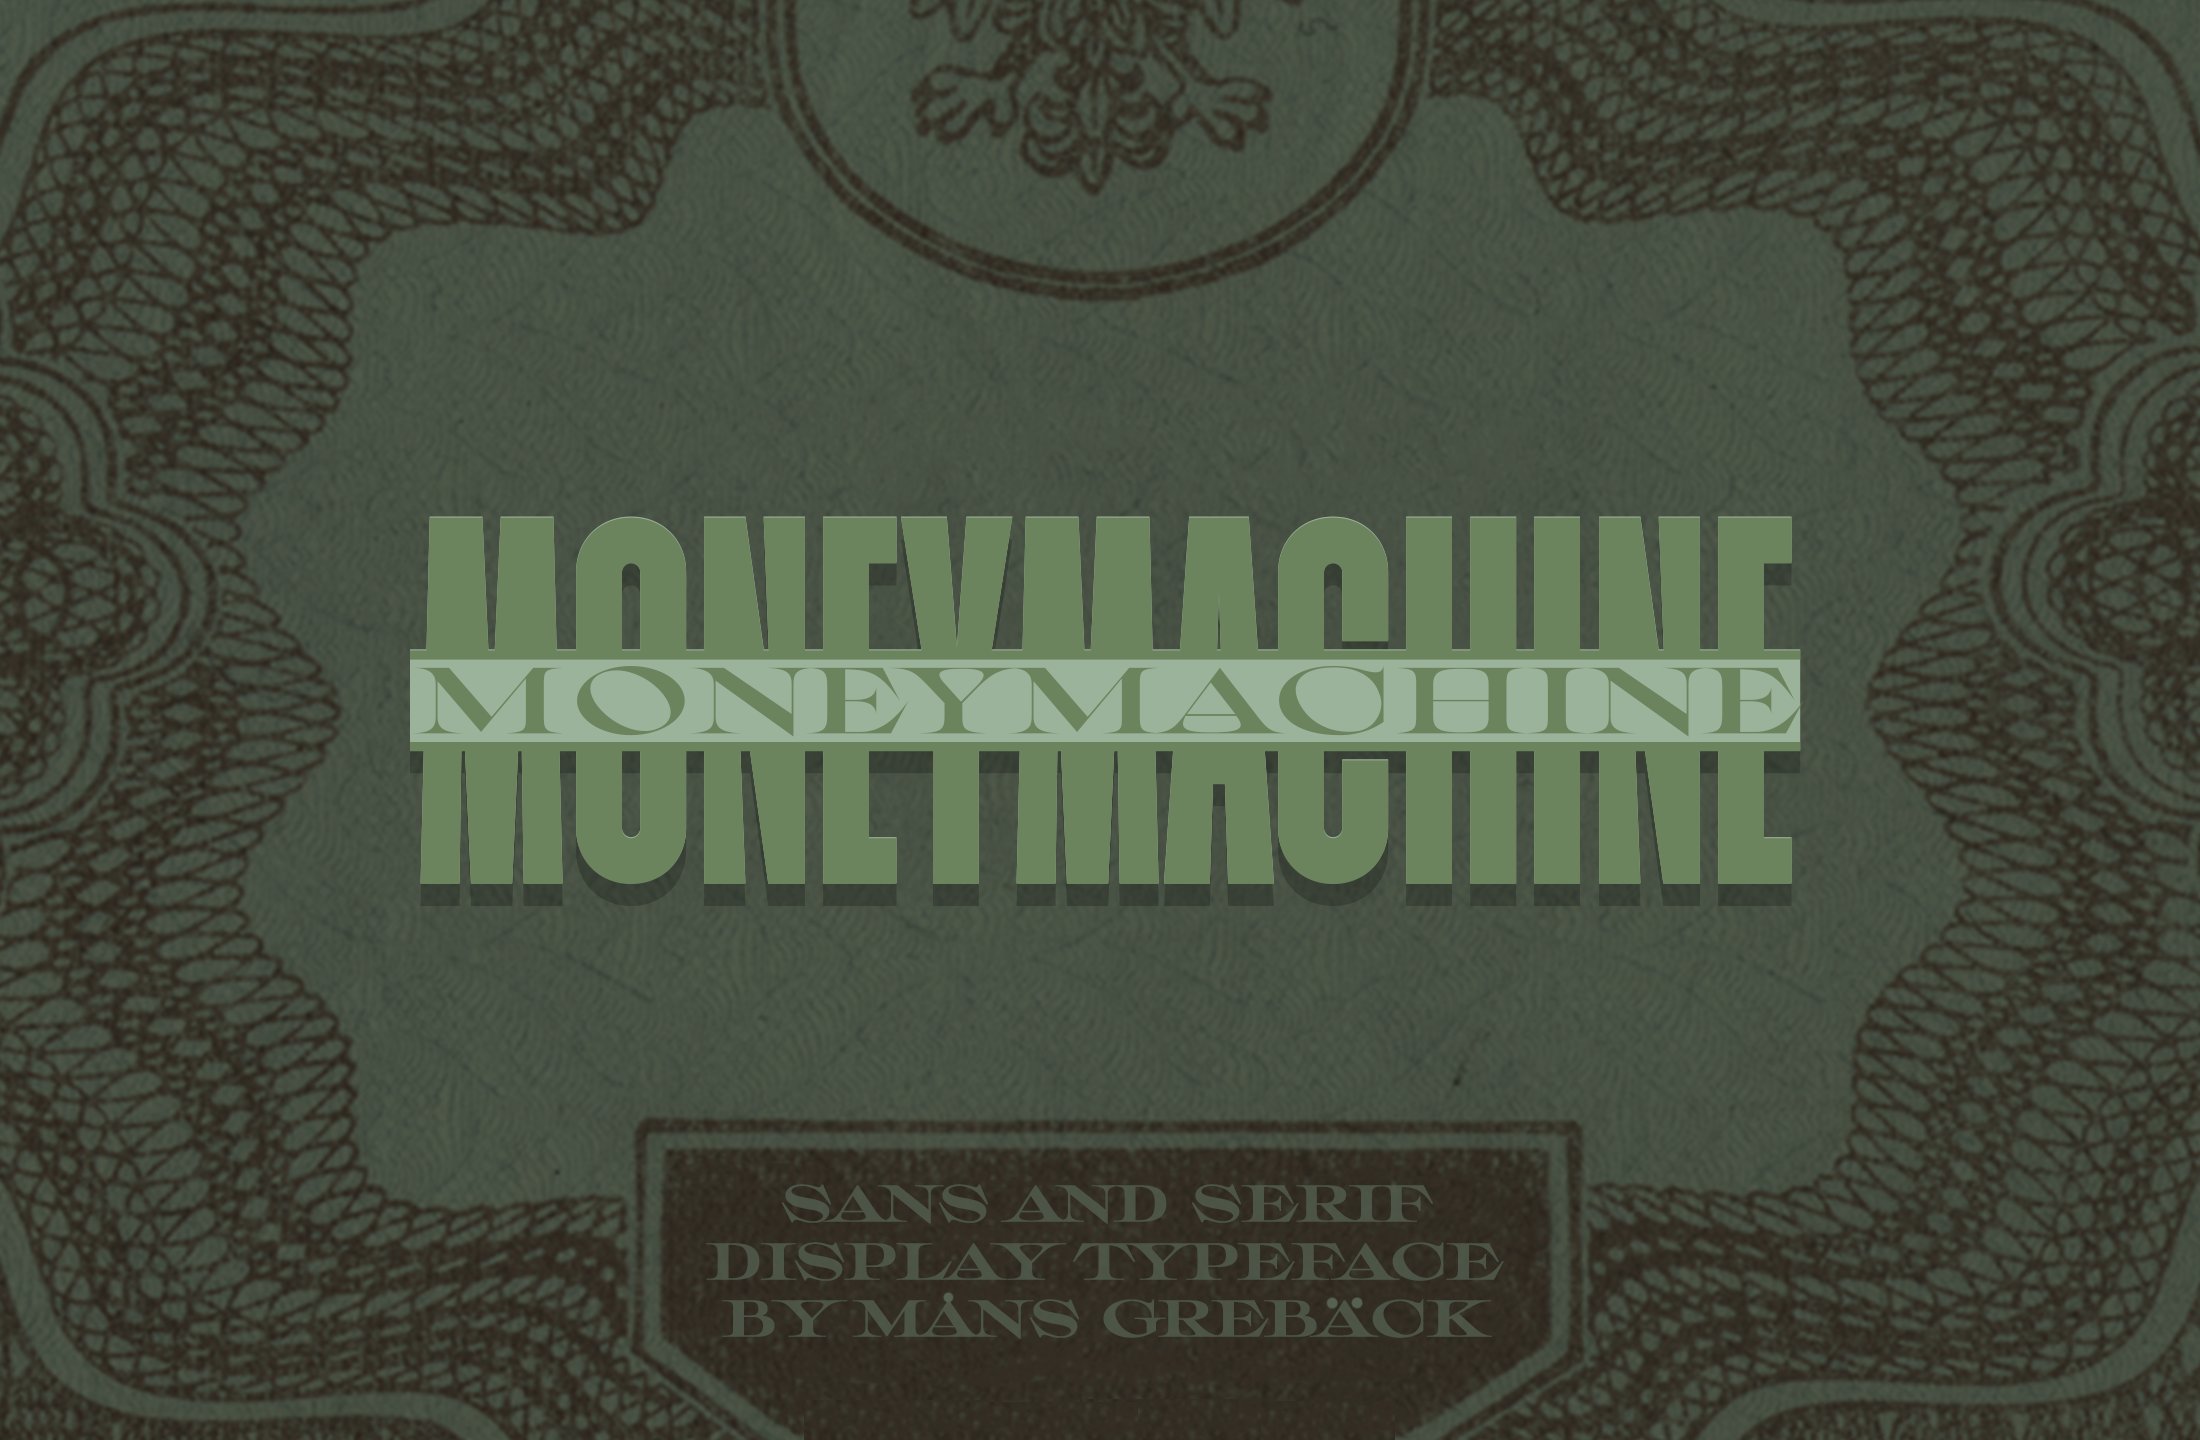 Money Machine – Six Cash Typefaces cover image.